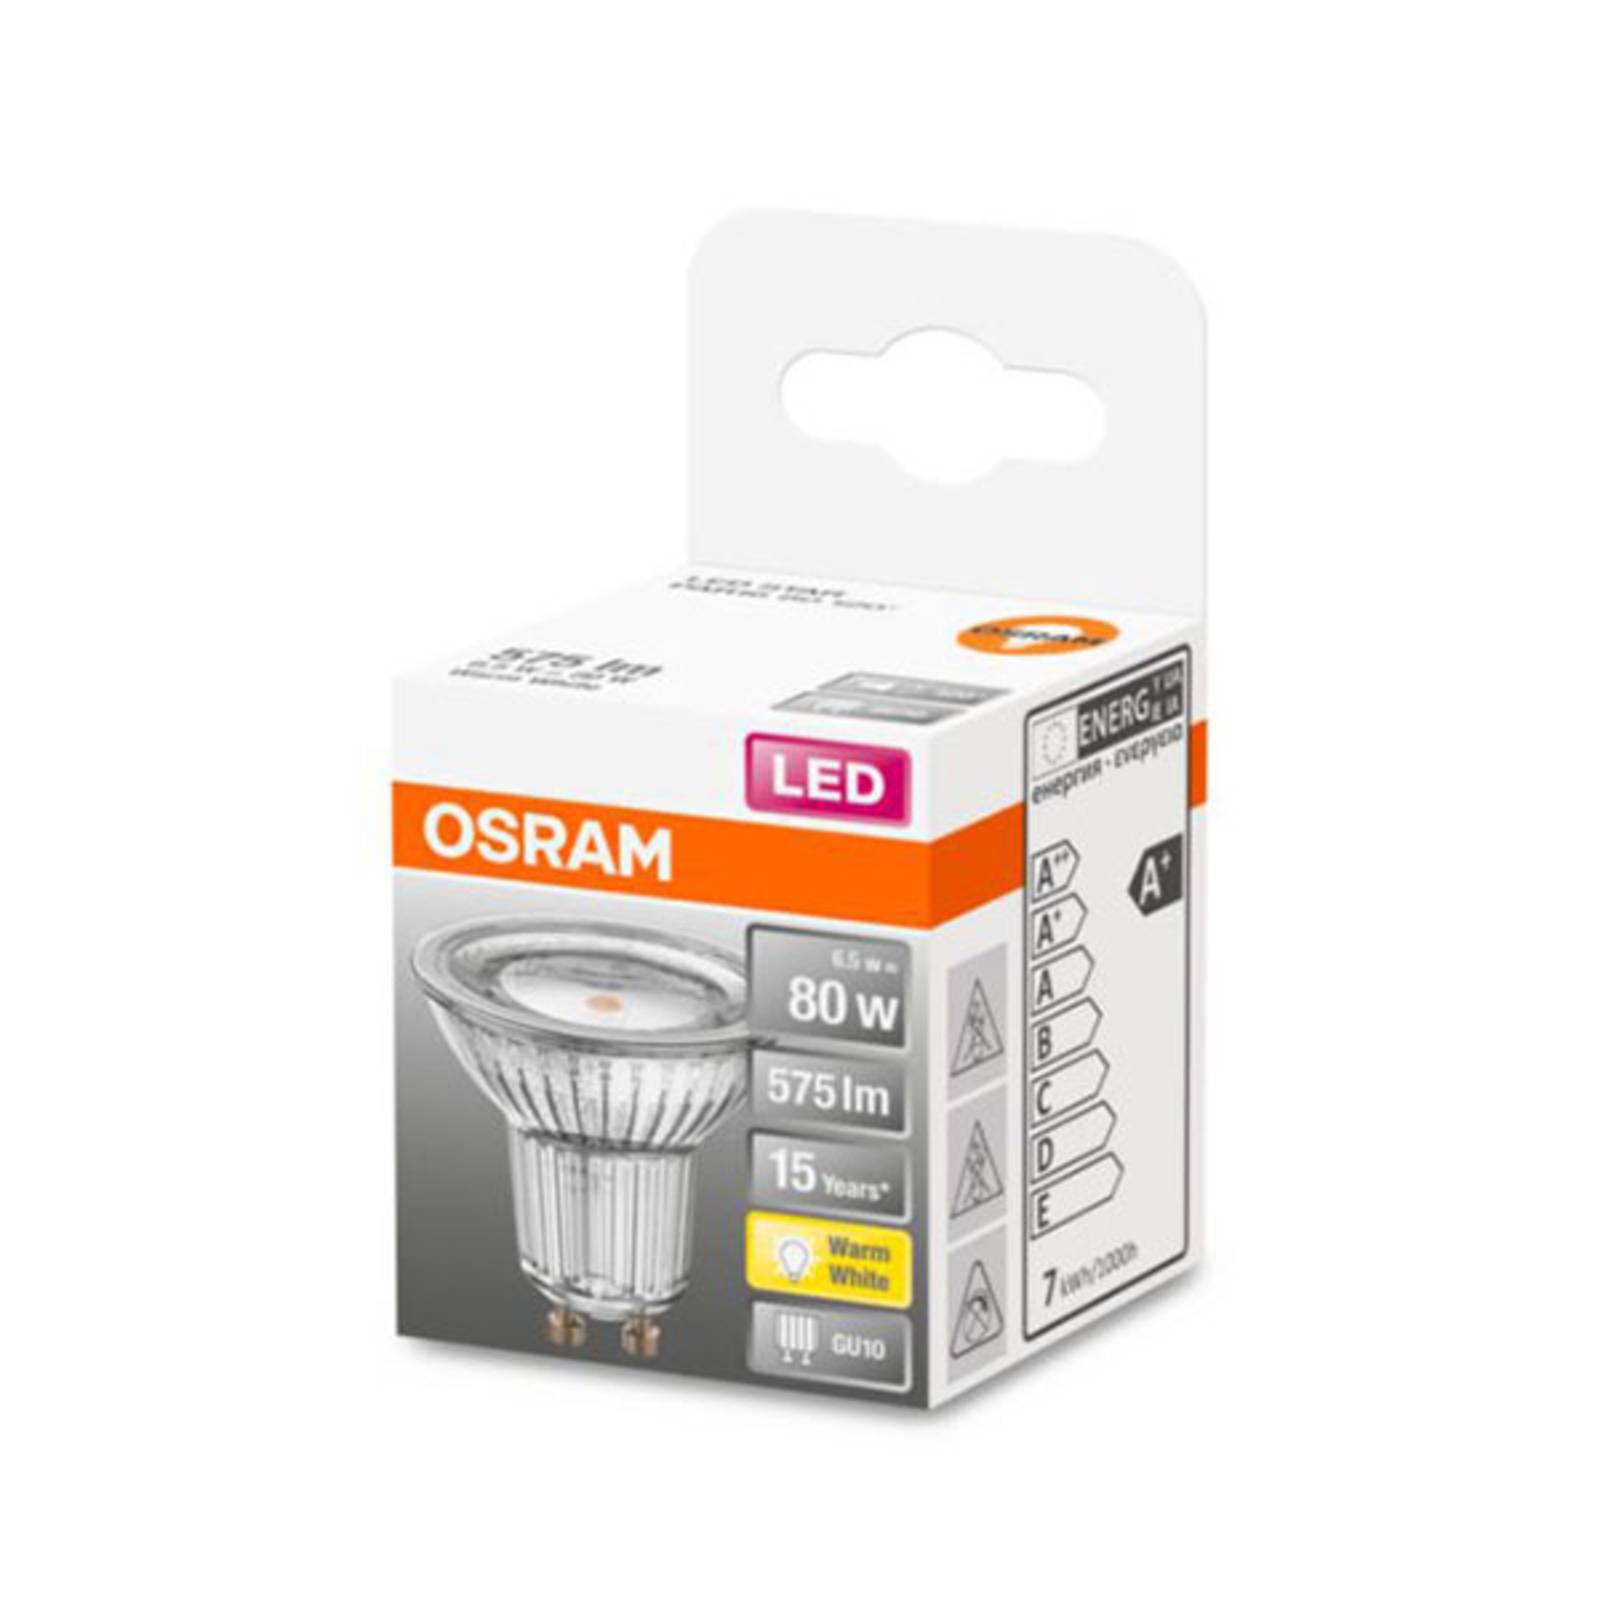 OSRAM OSRAM LED reflektor GU10 6,9W teplá bílá 120°